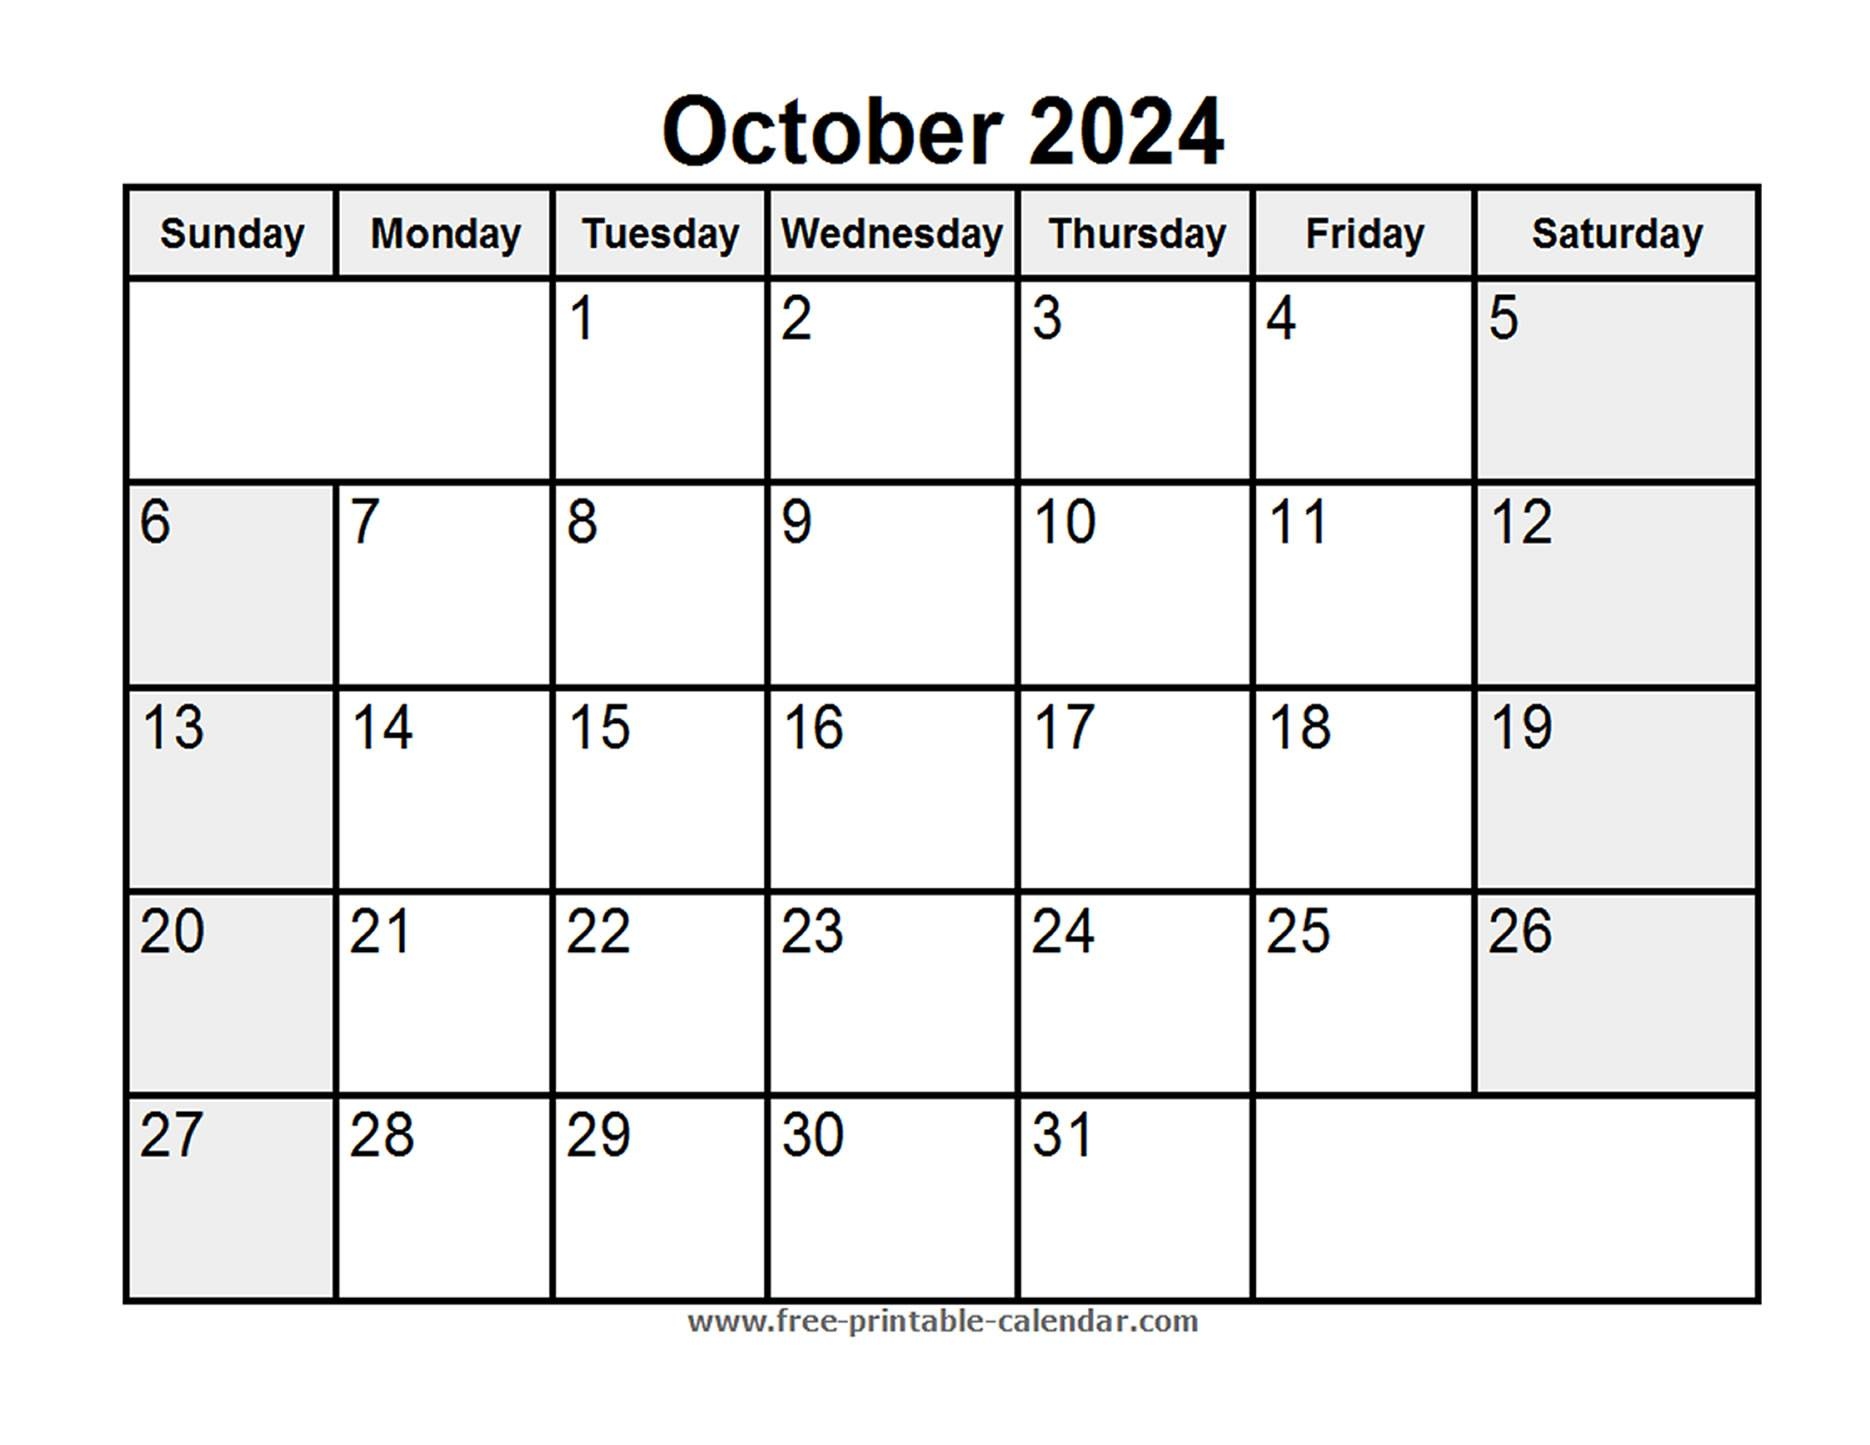 Printable October 2024 Calendar - Free-Printable-Calendar in Free Printable Calendar 2024 October And November